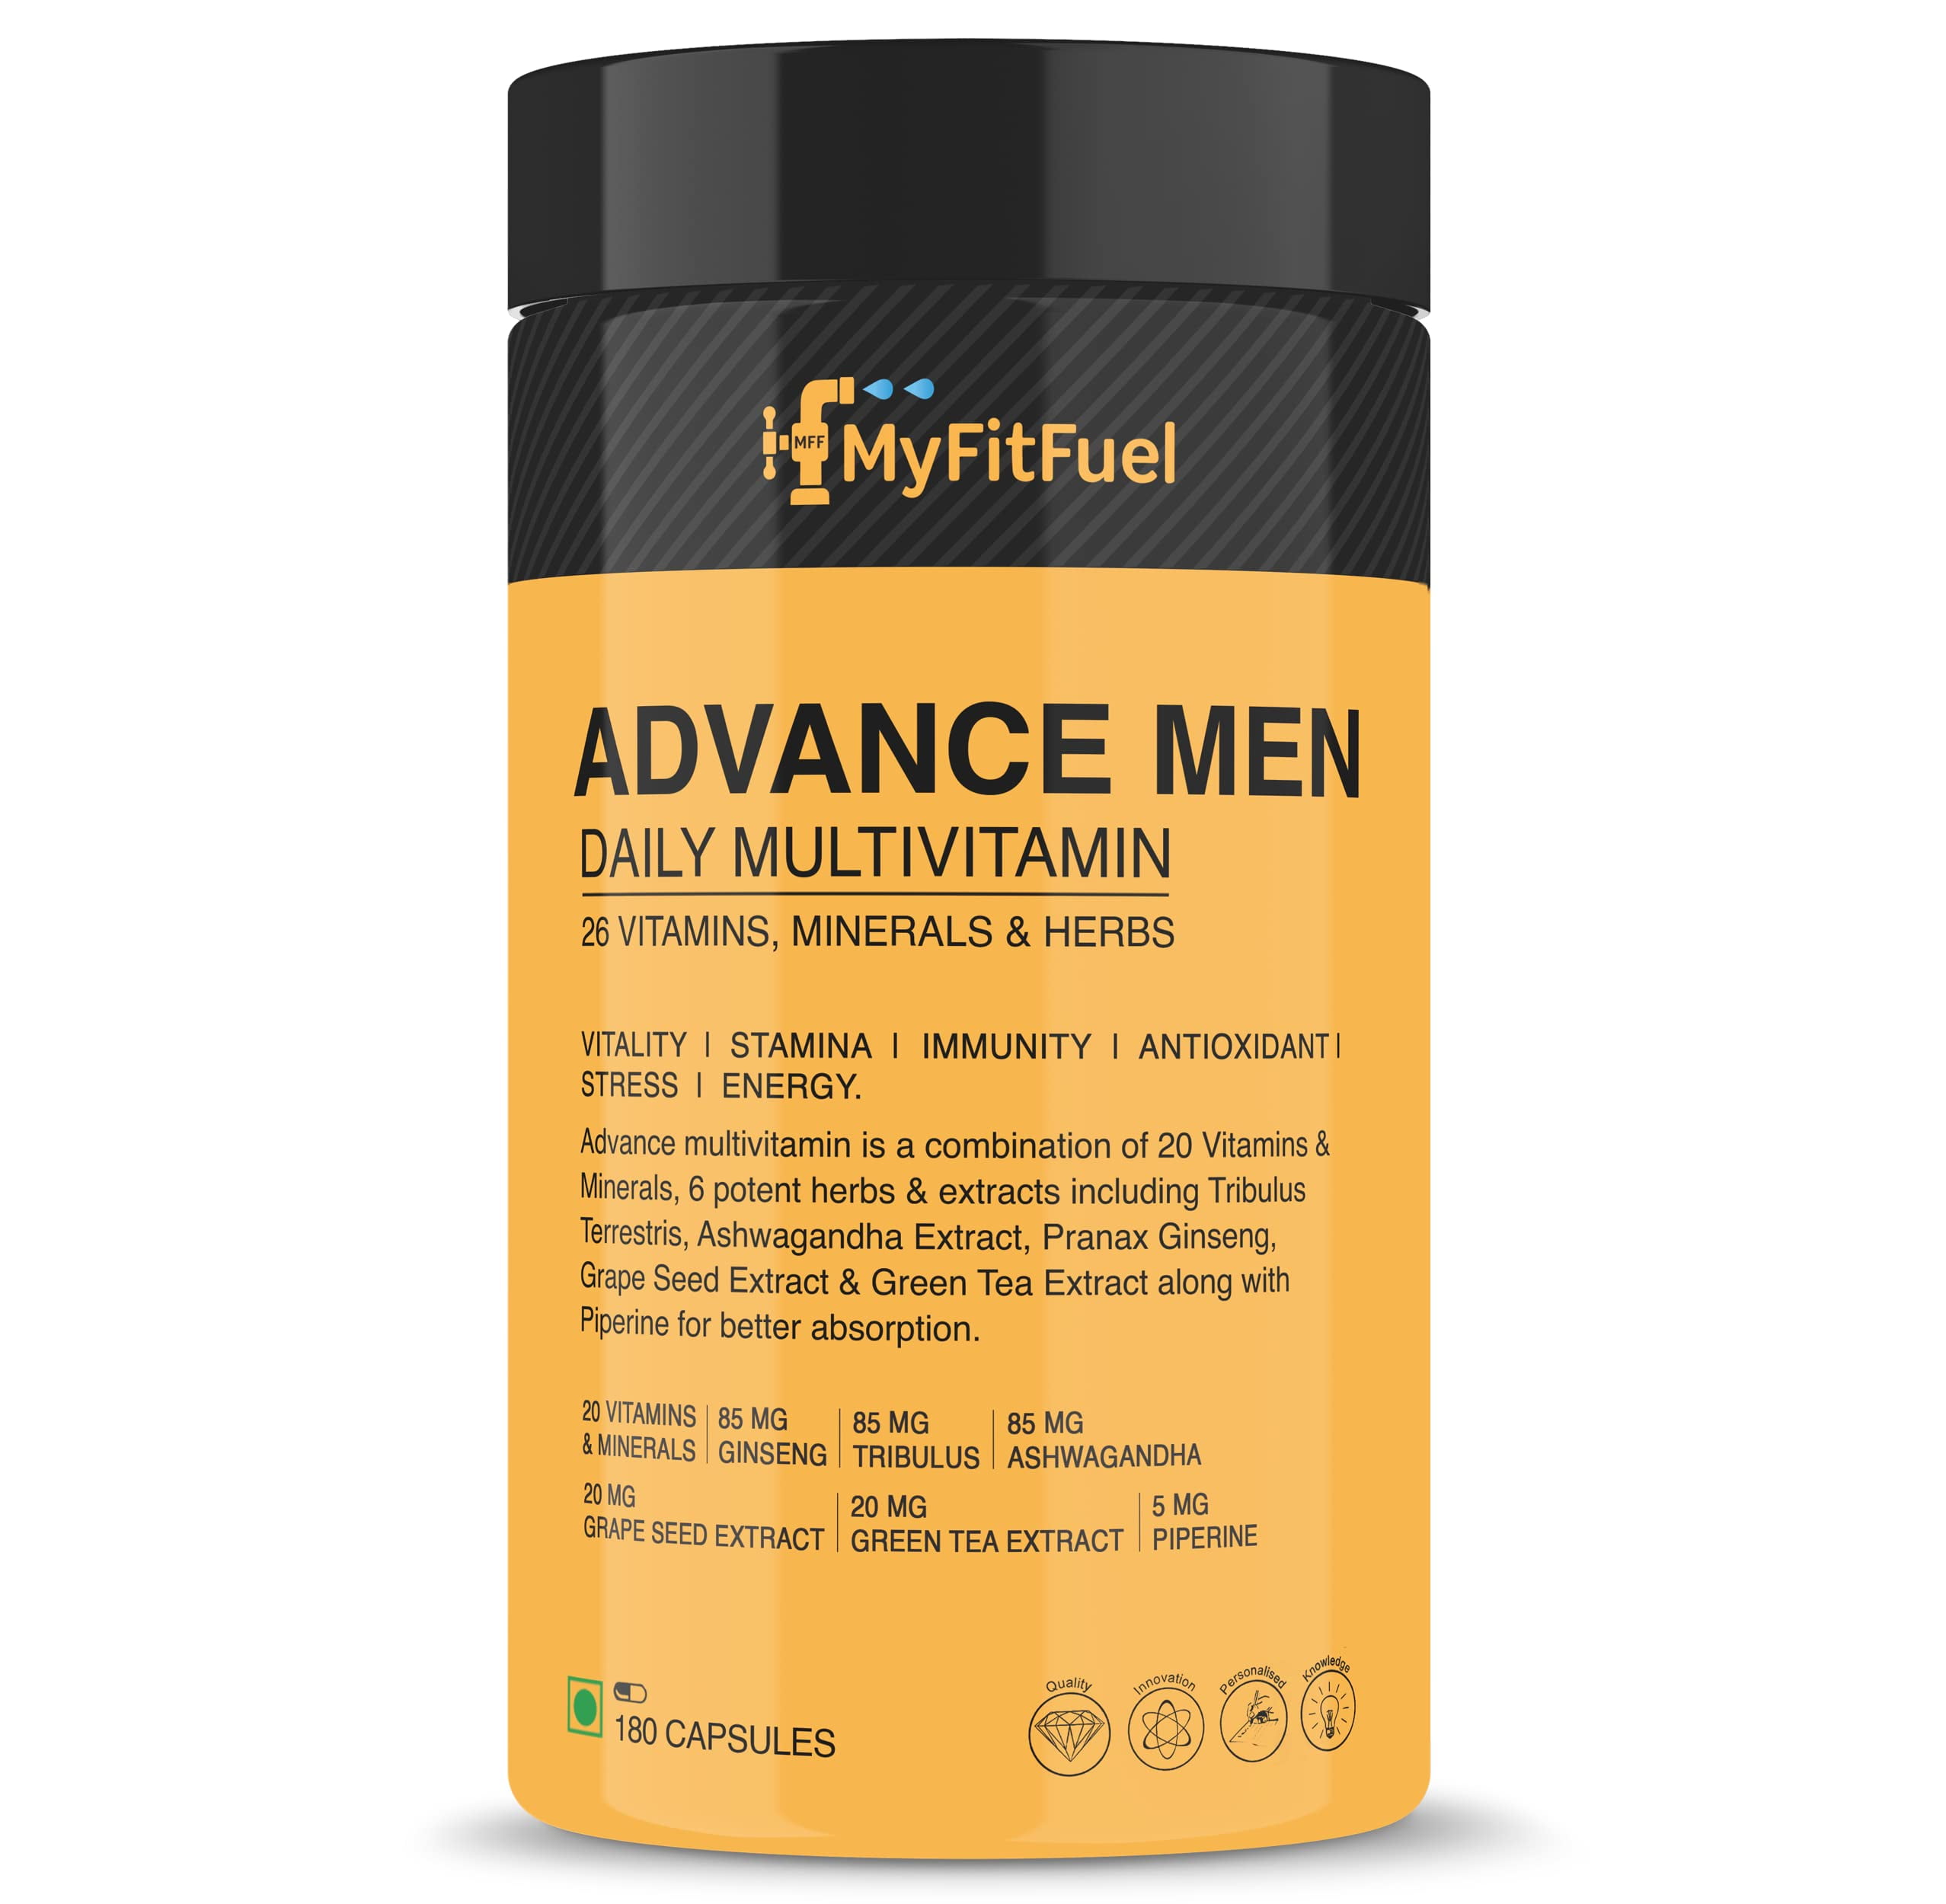 Myfitfuel Men Advance Daily Multivitamin (26 Vitamins, Minerals